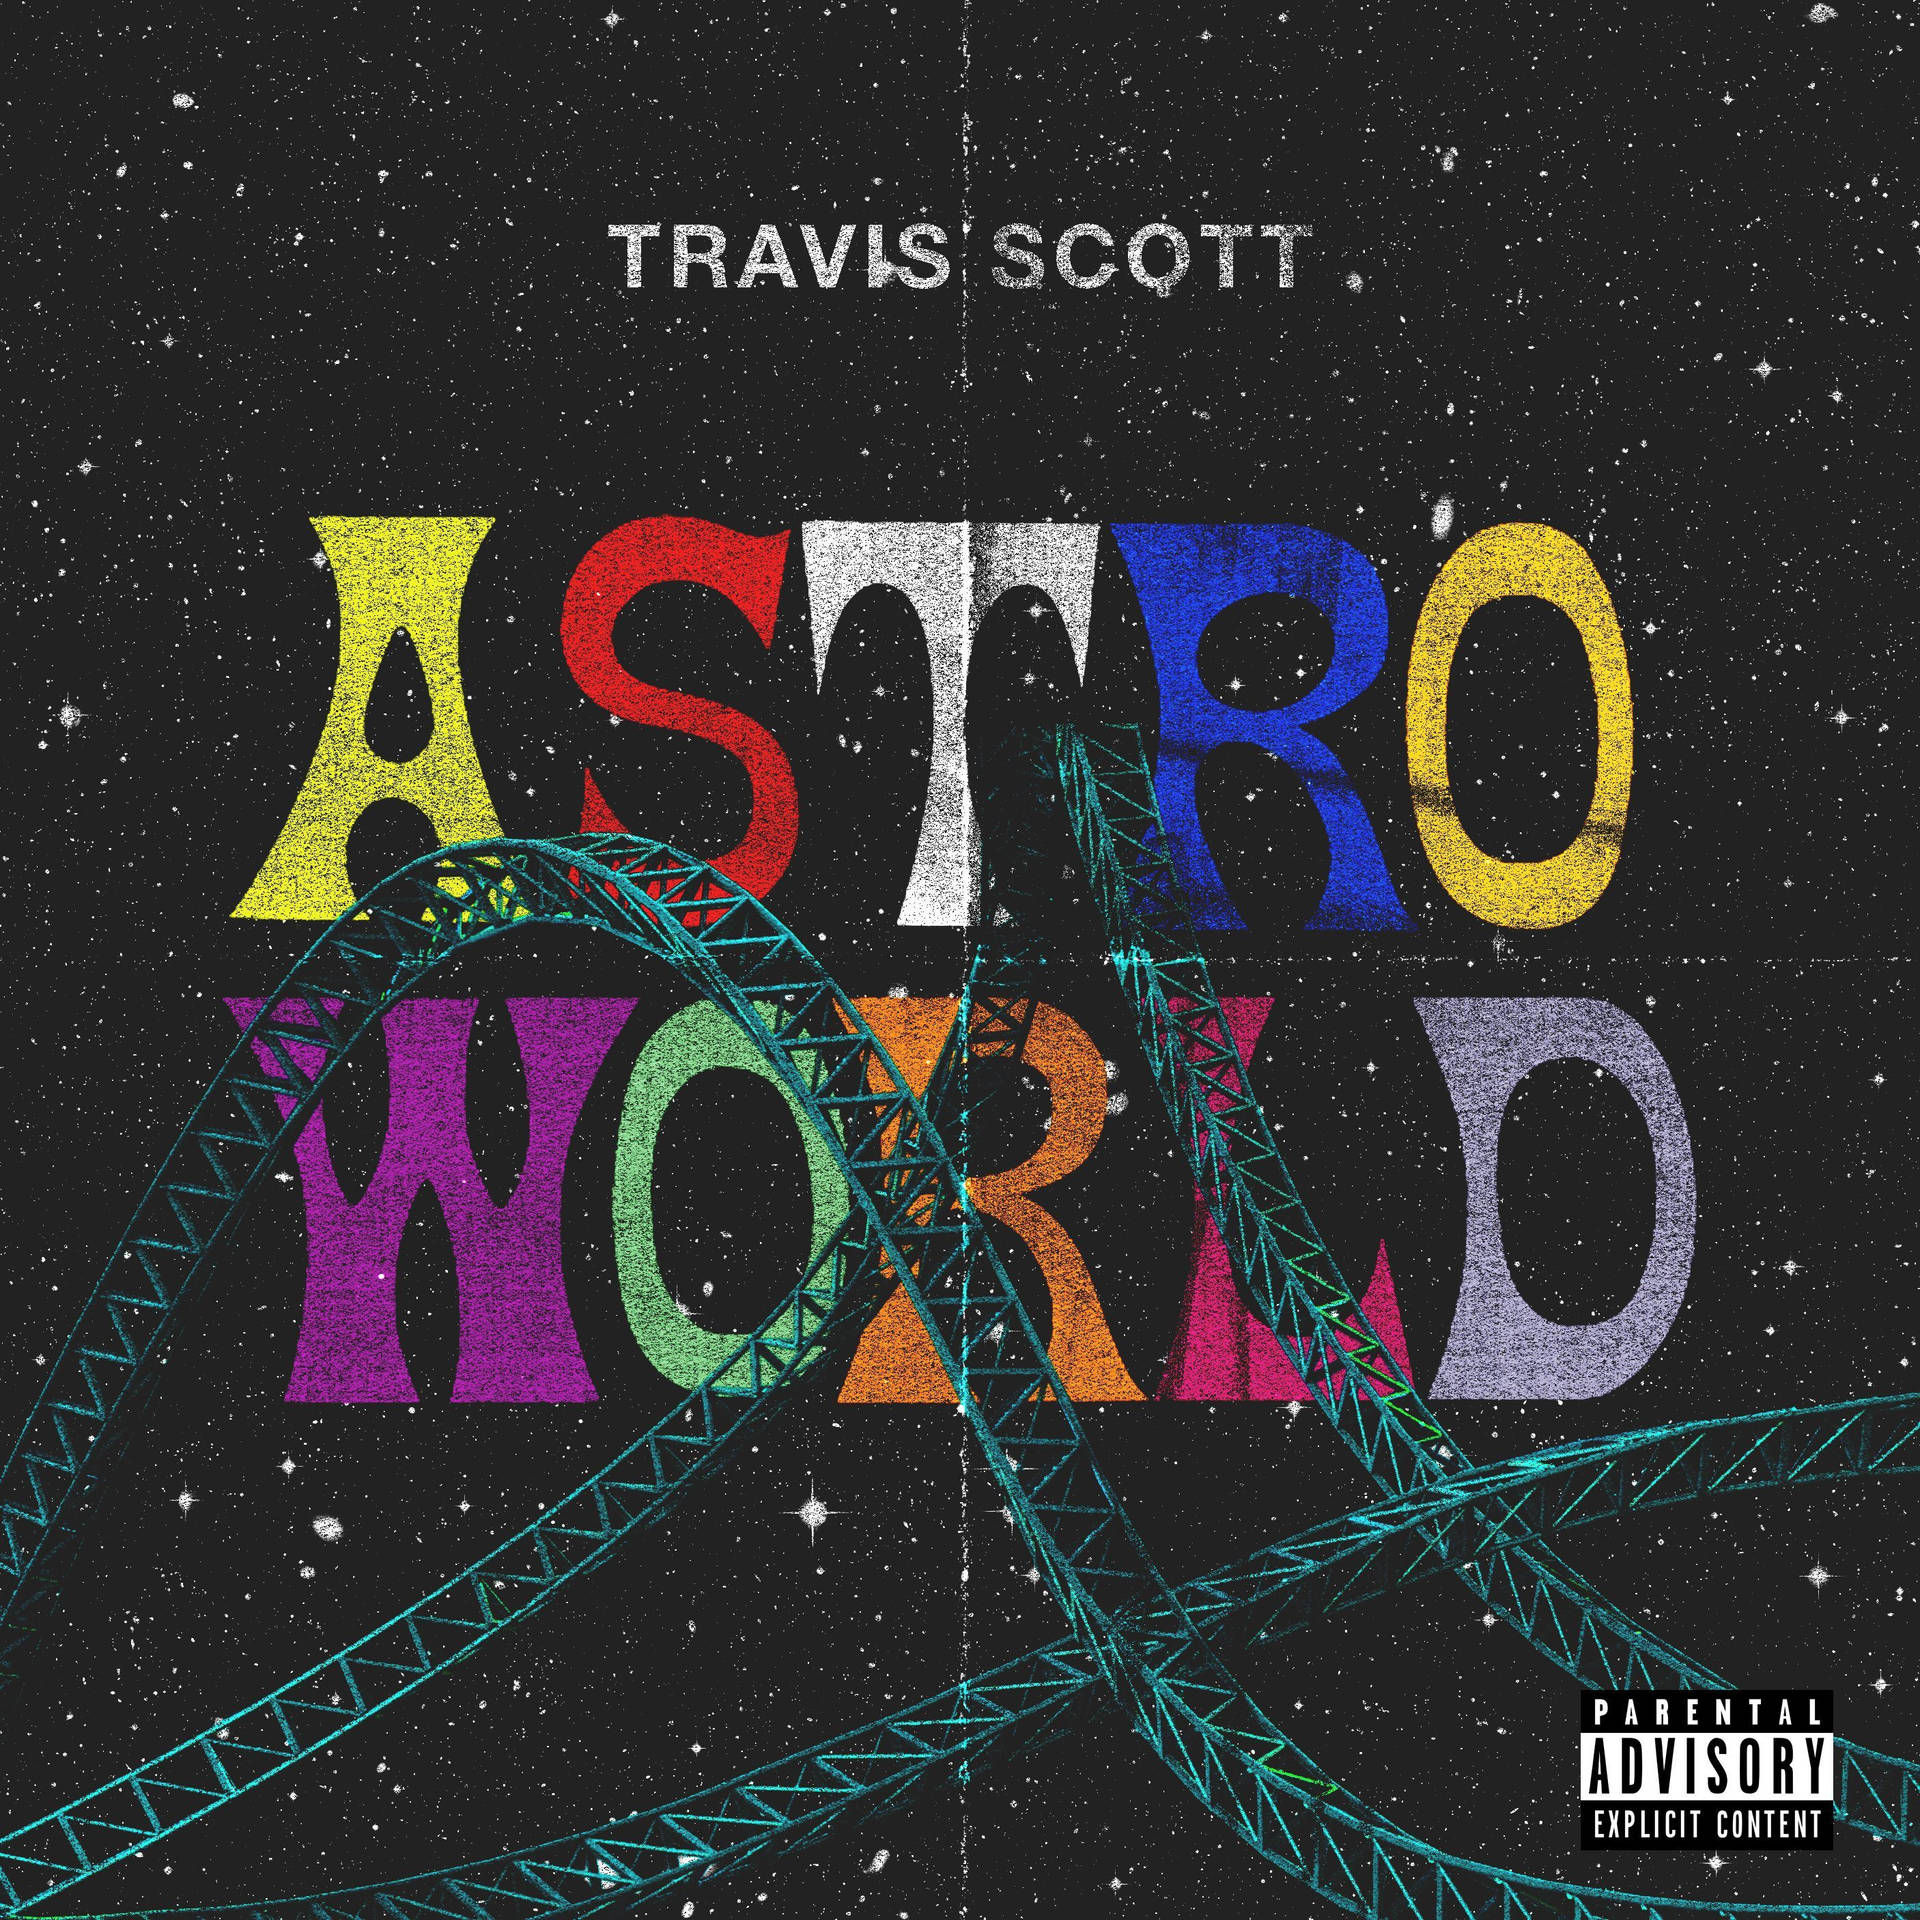 Travis Scott Astroworld Parental Advisory Cover Background